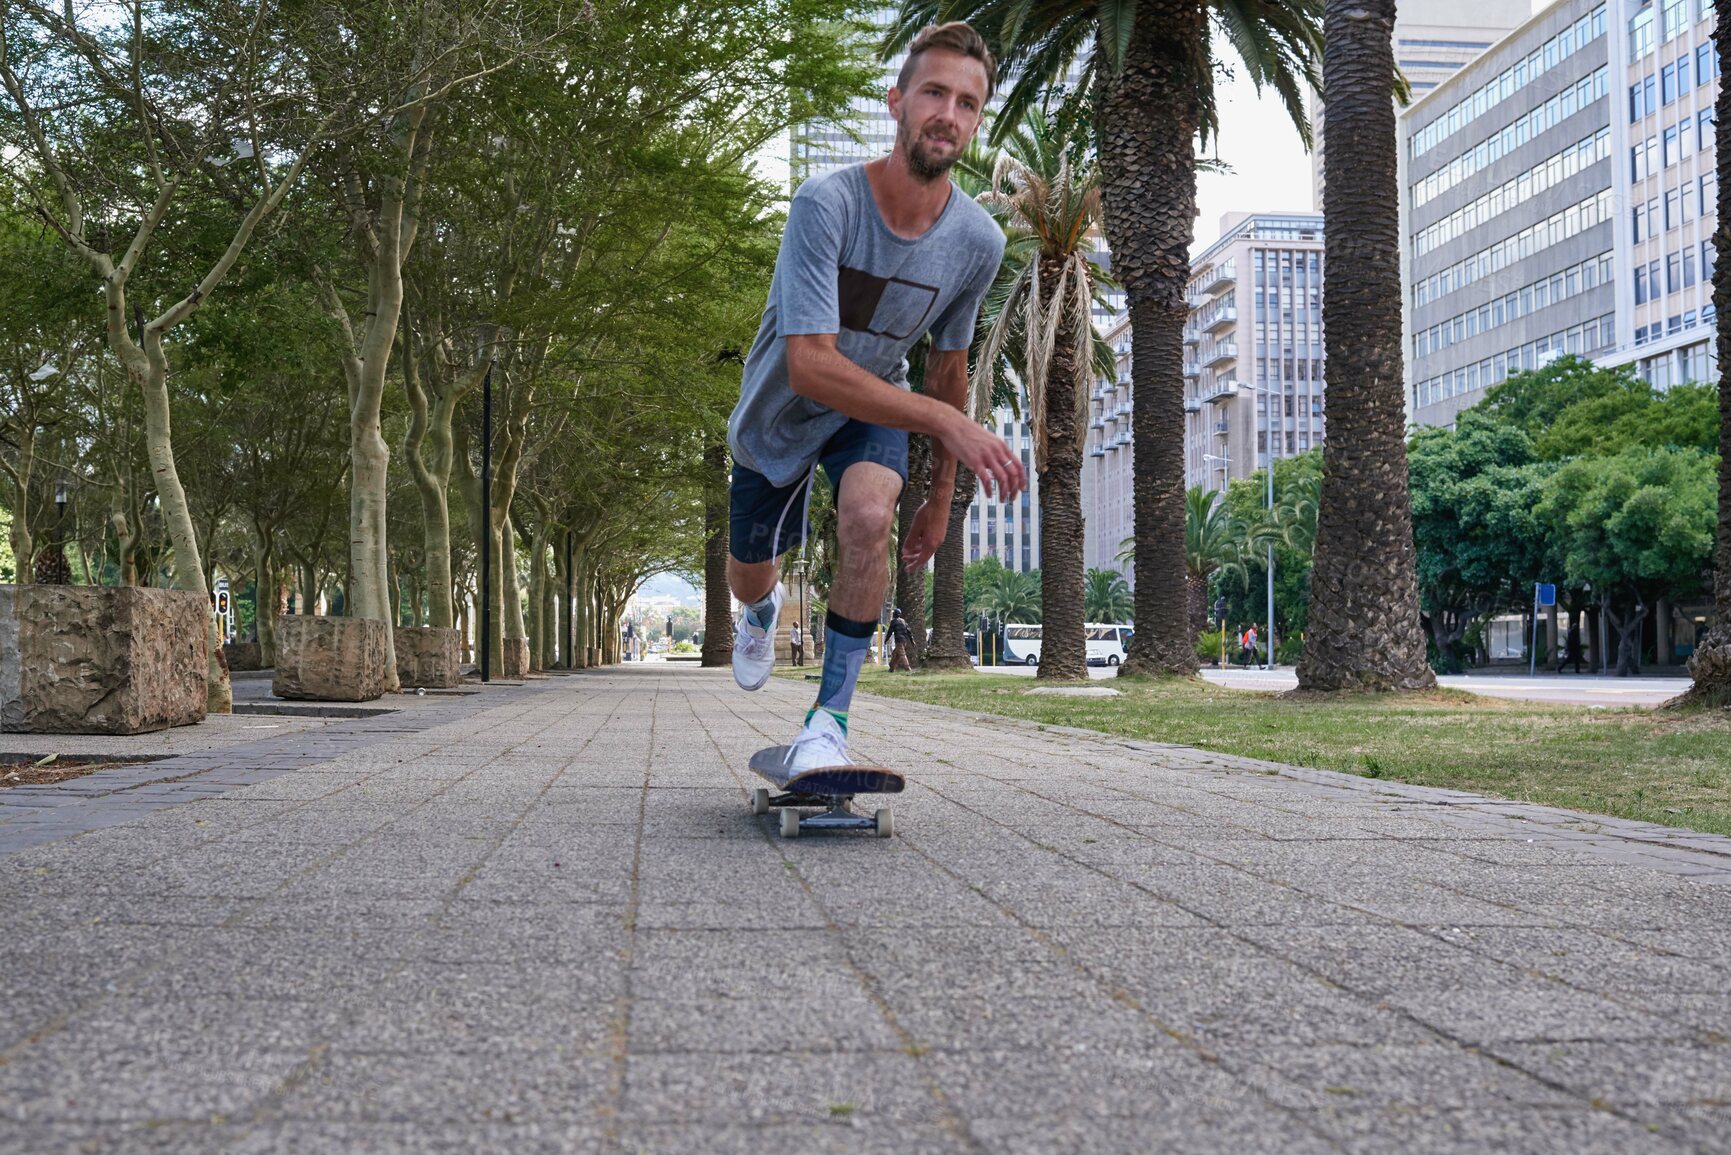 Buy stock photo Shot of skateboarders in the city